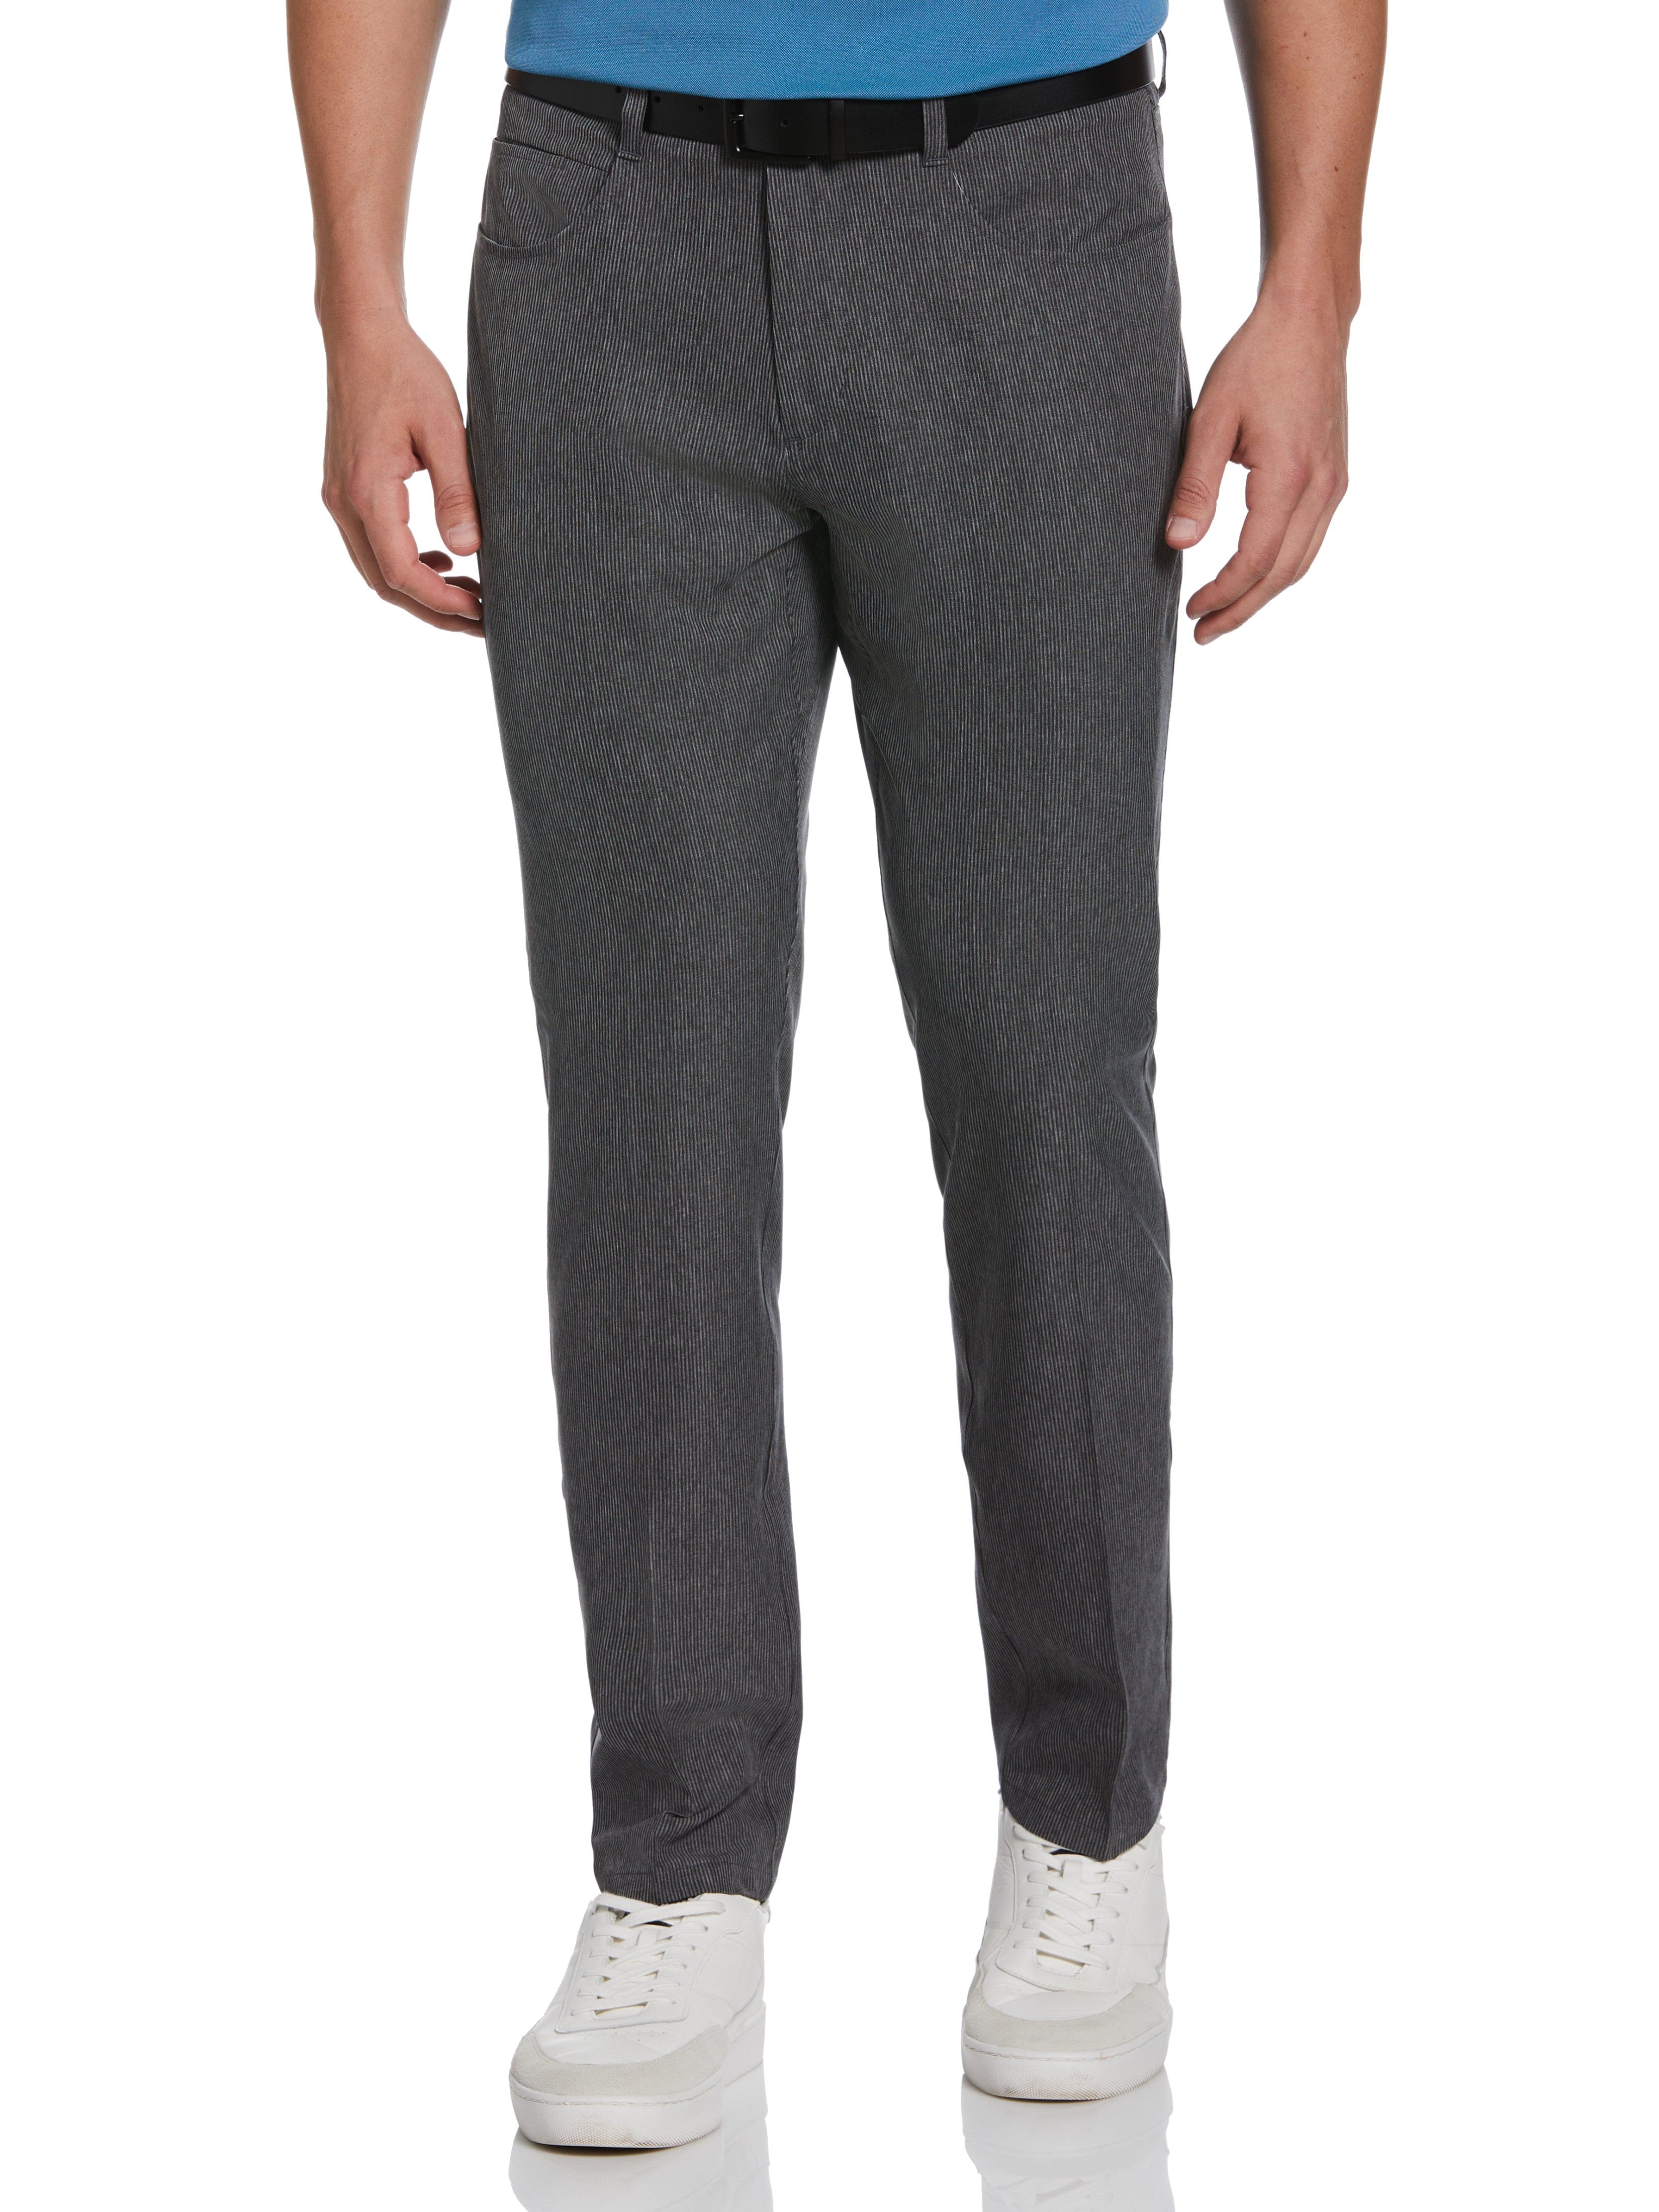 Original Penguin Mens Flat Front Fine Line Print Golf Pants, Size 33 x 32, Black, Polyester/Elastane | Golf Apparel Shop